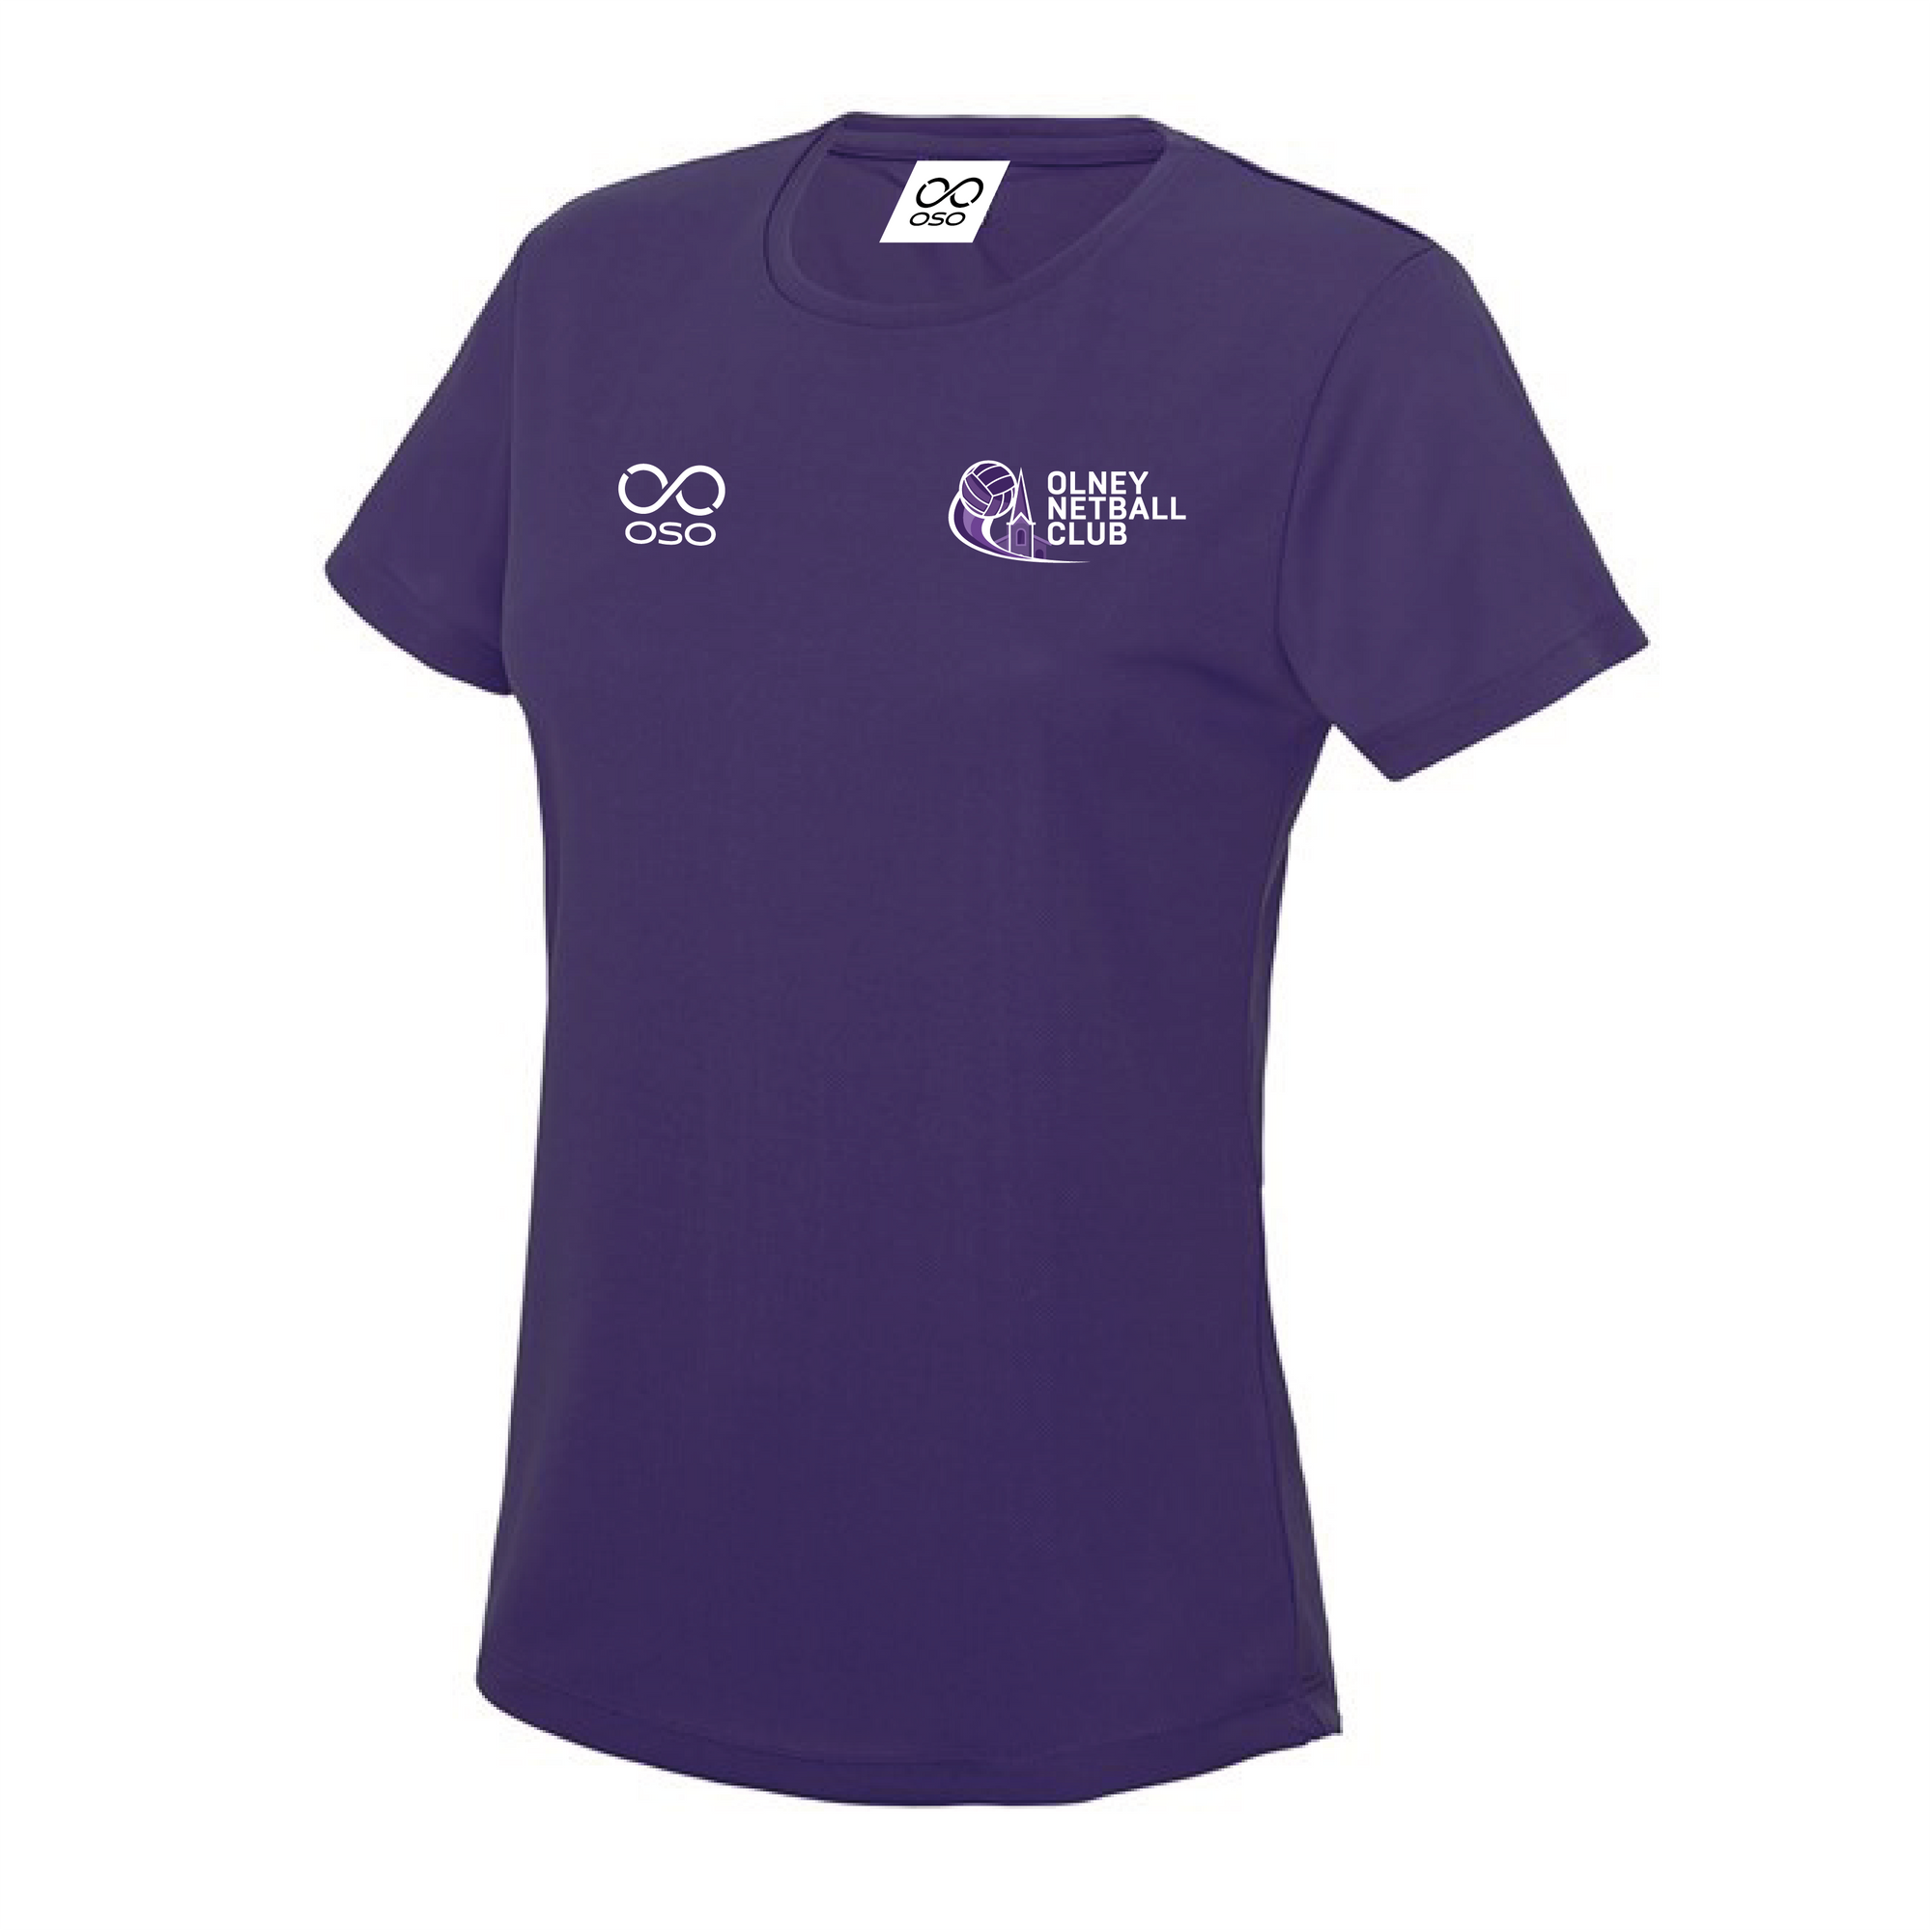 Olney Netball Club Team Technical T Shirt - Purple